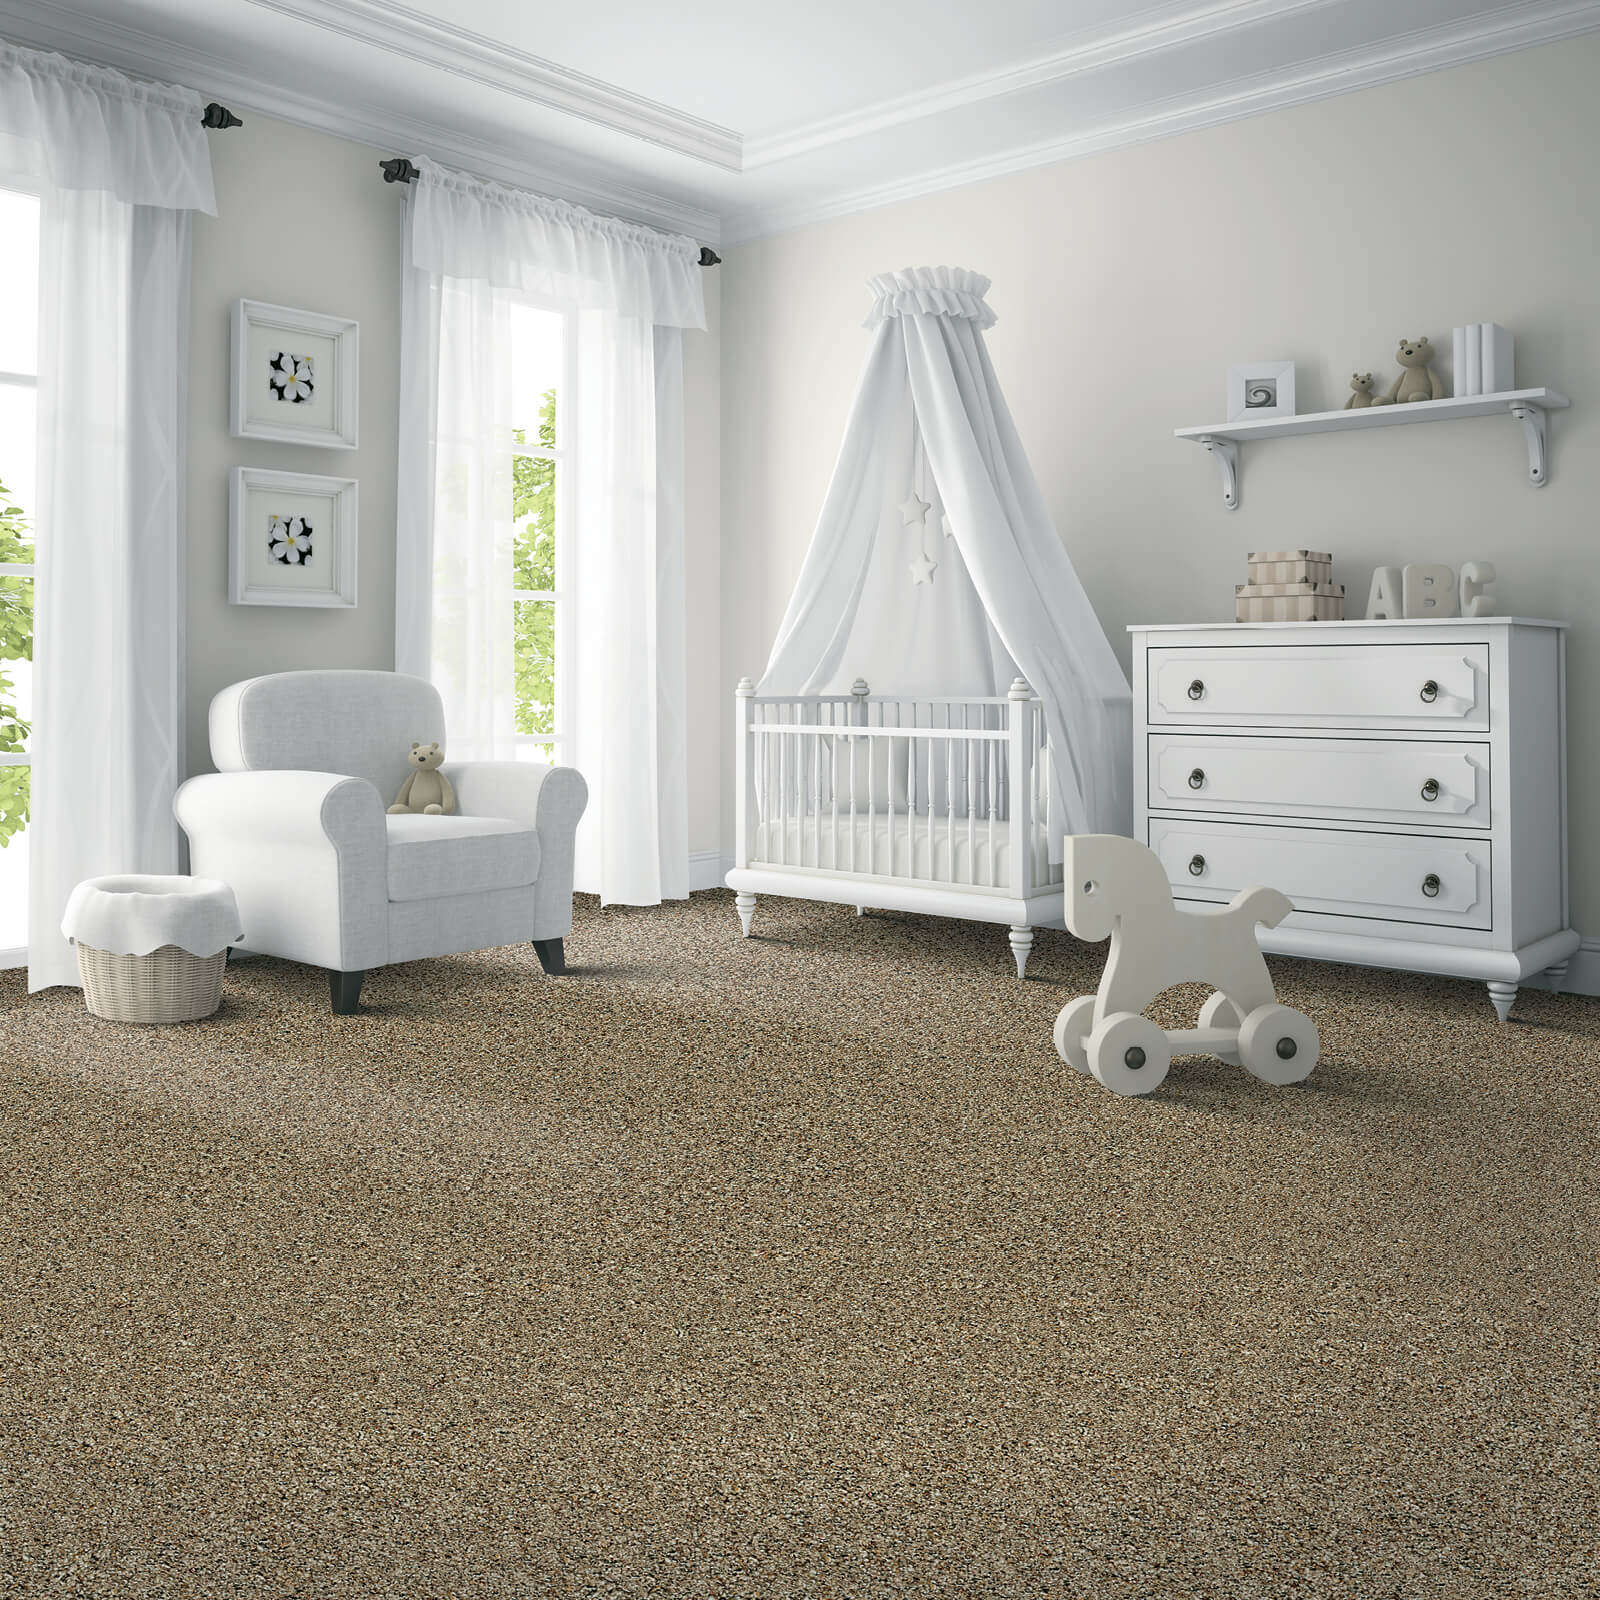 Baby room Carpet flooring | Gilman Floors